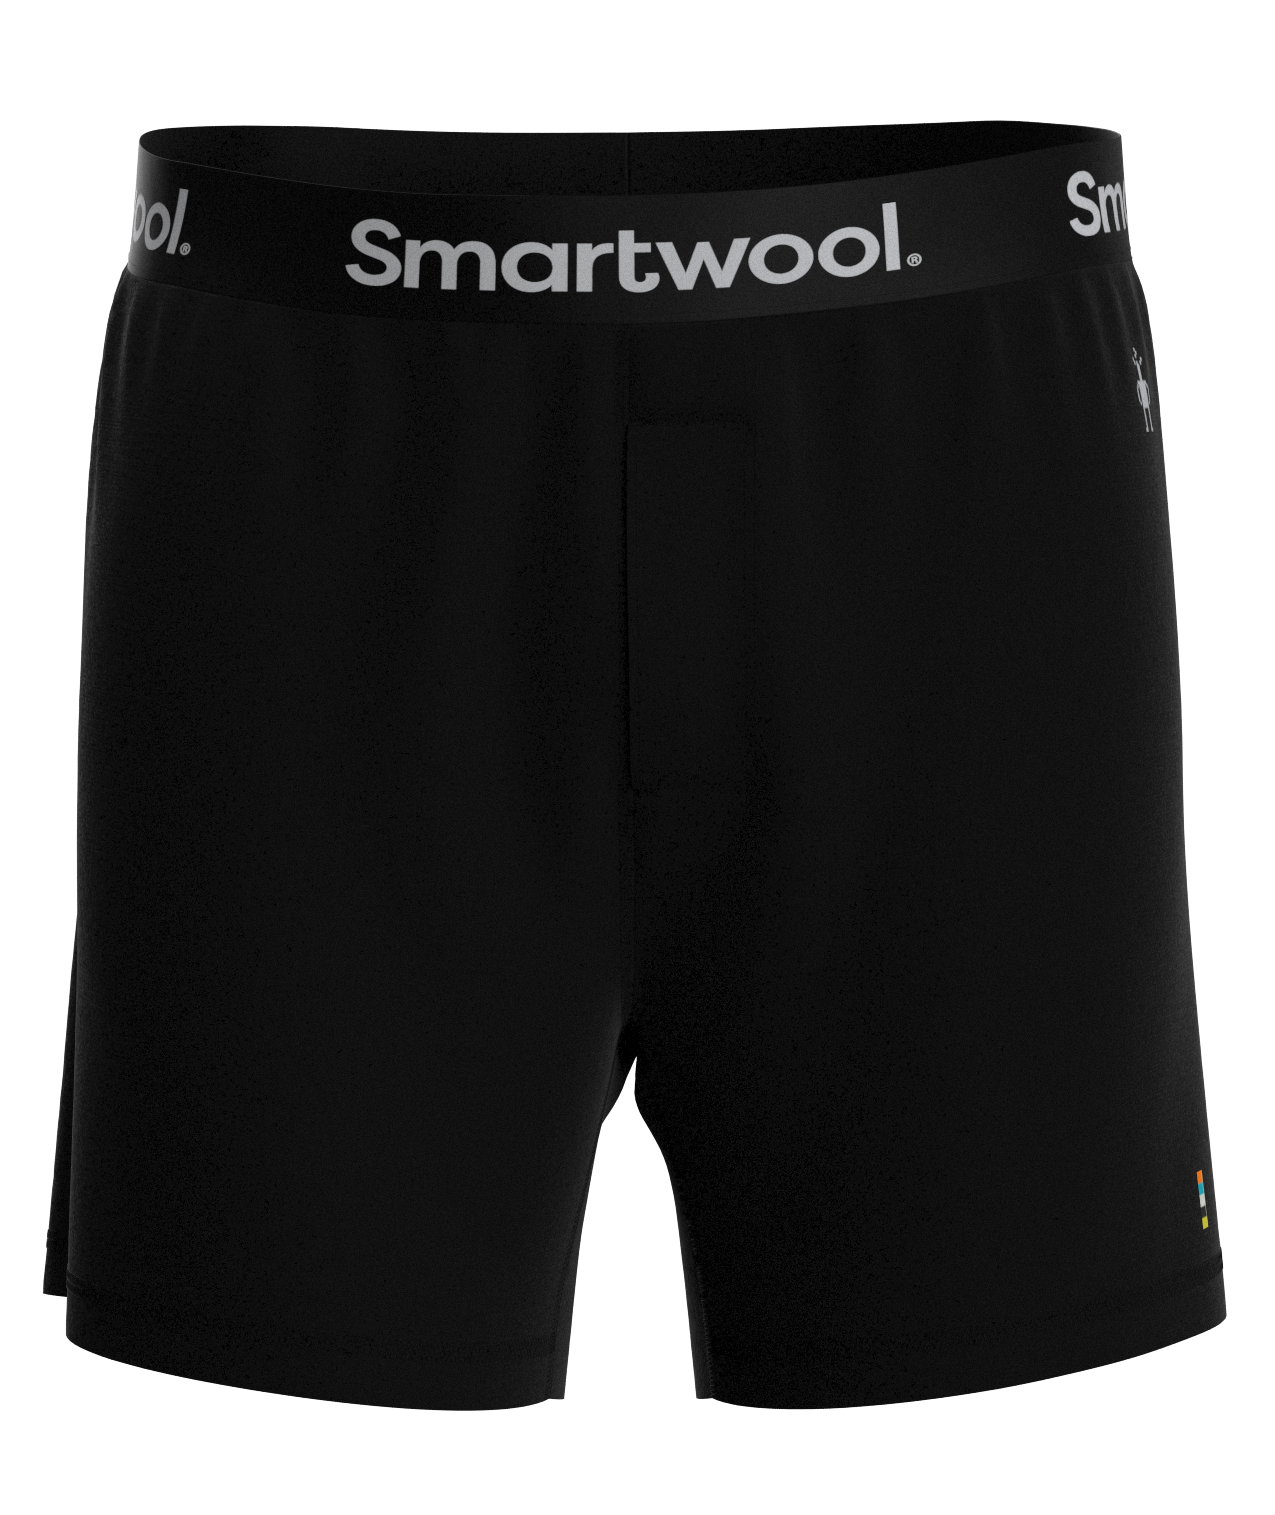 Smartwool Boxer Brief Boxed - Men's, Boxers & Briefs